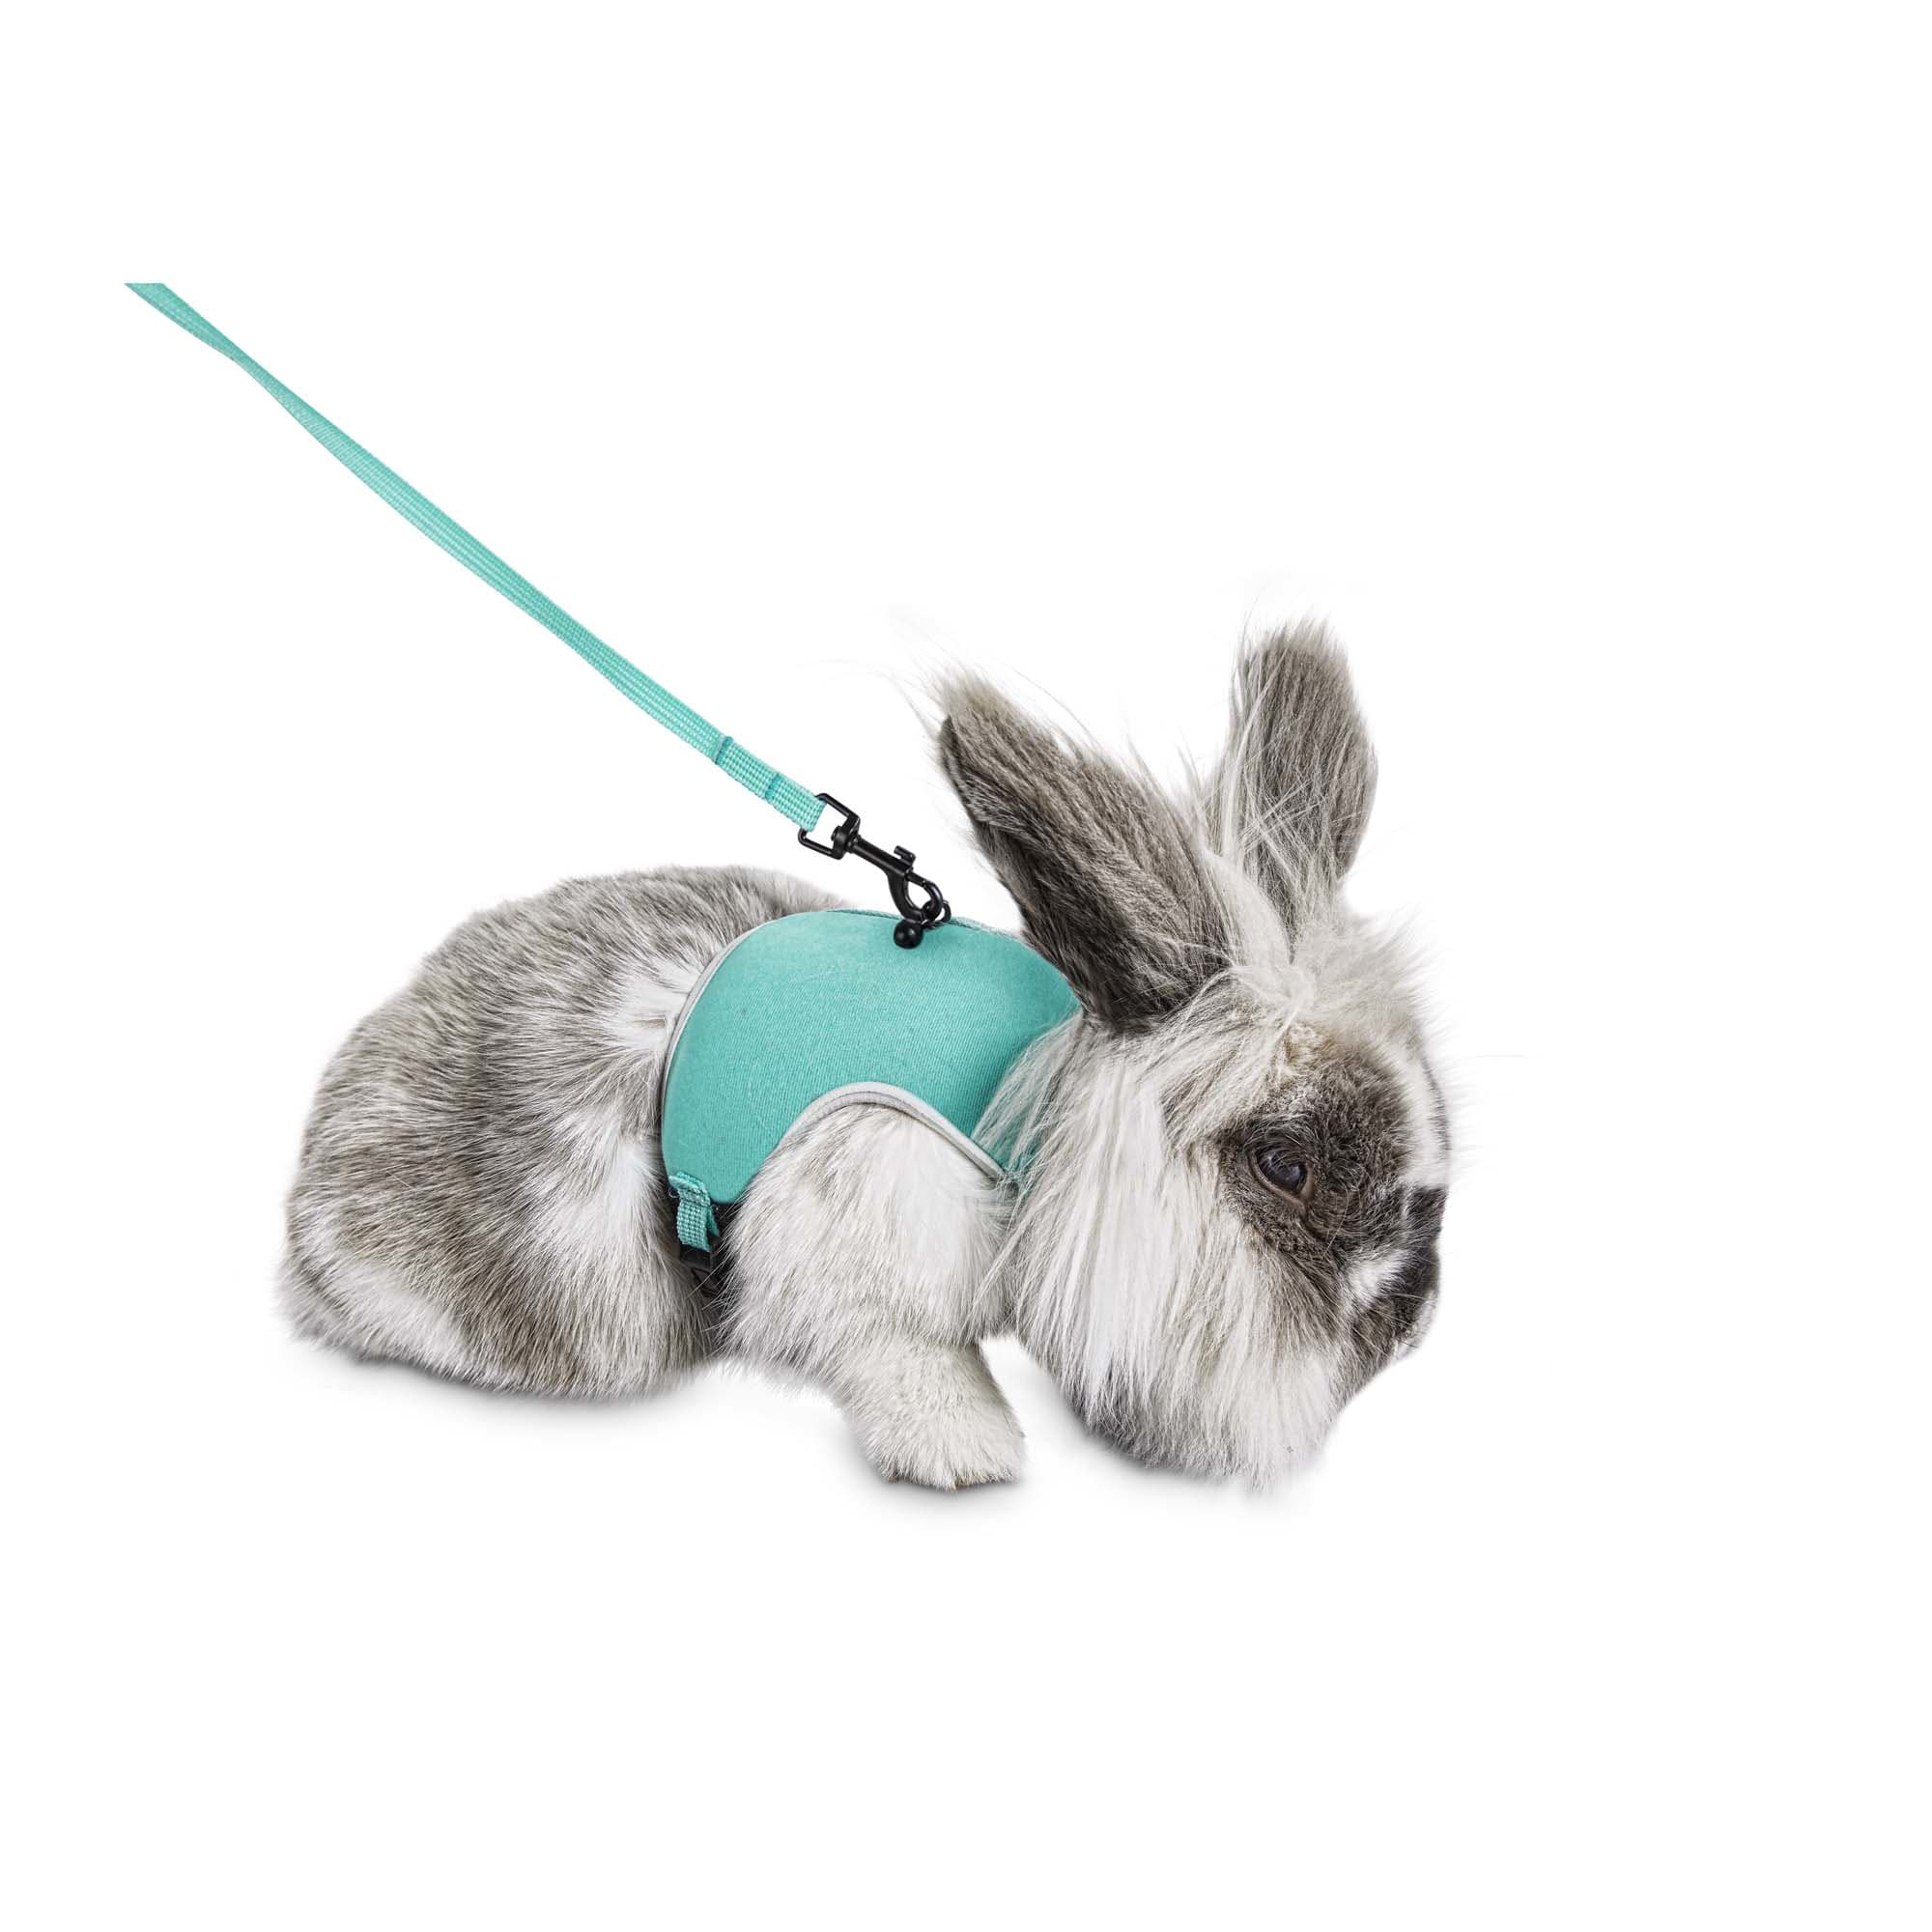 Super Pet Ferret/Rabbit/Guine Pig Comfort Harness and Stretchy Leash Lrg 